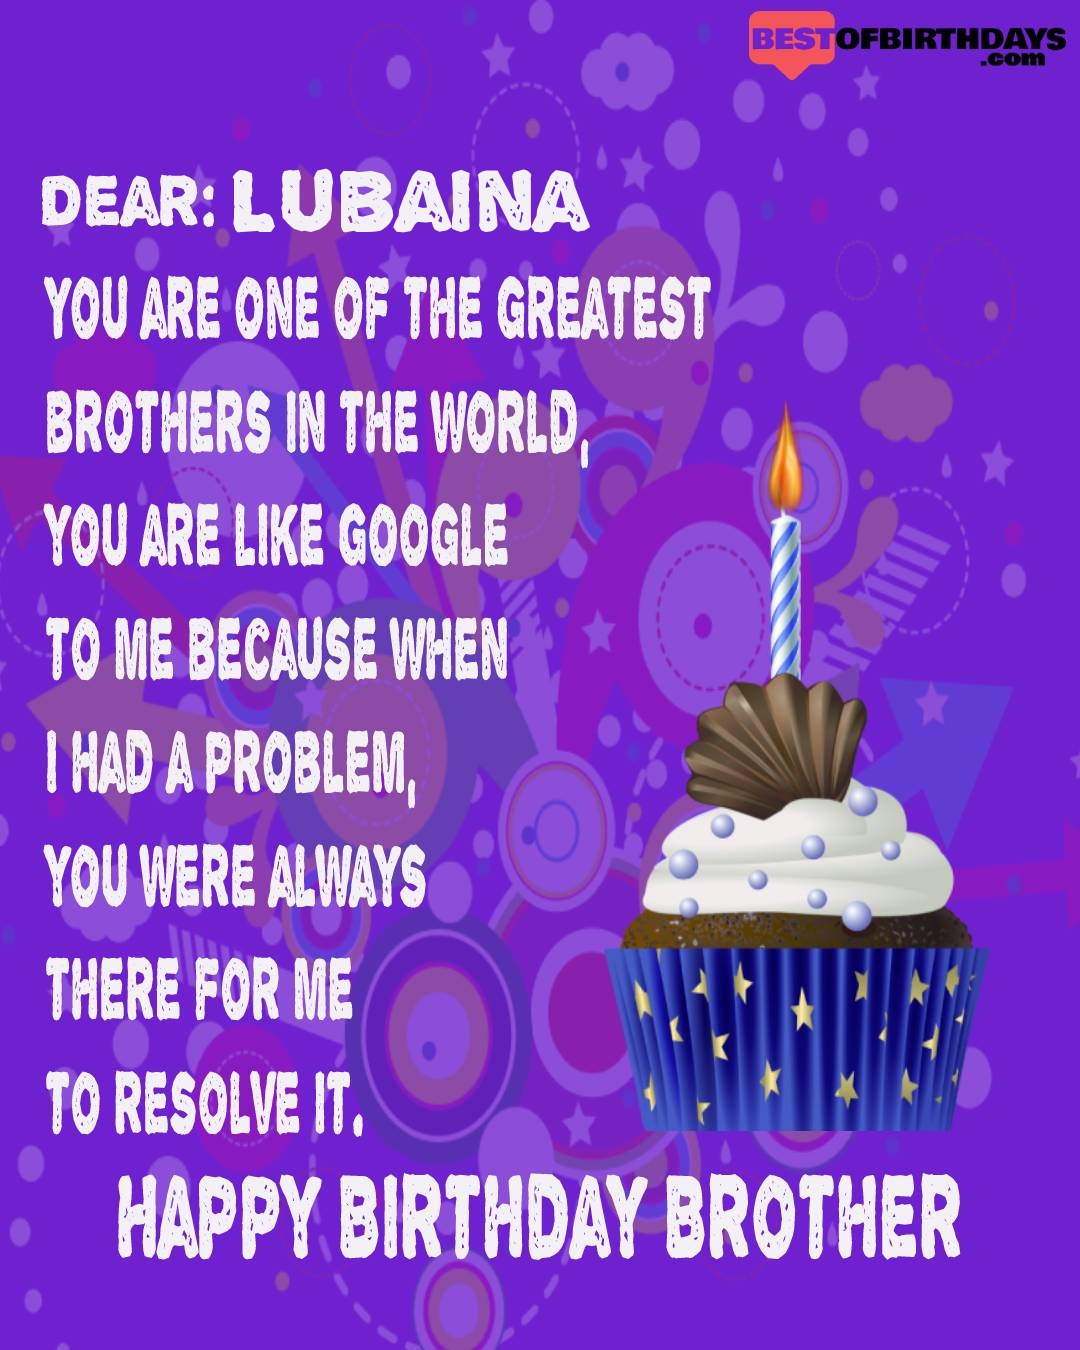 Happy birthday lubaina bhai brother bro